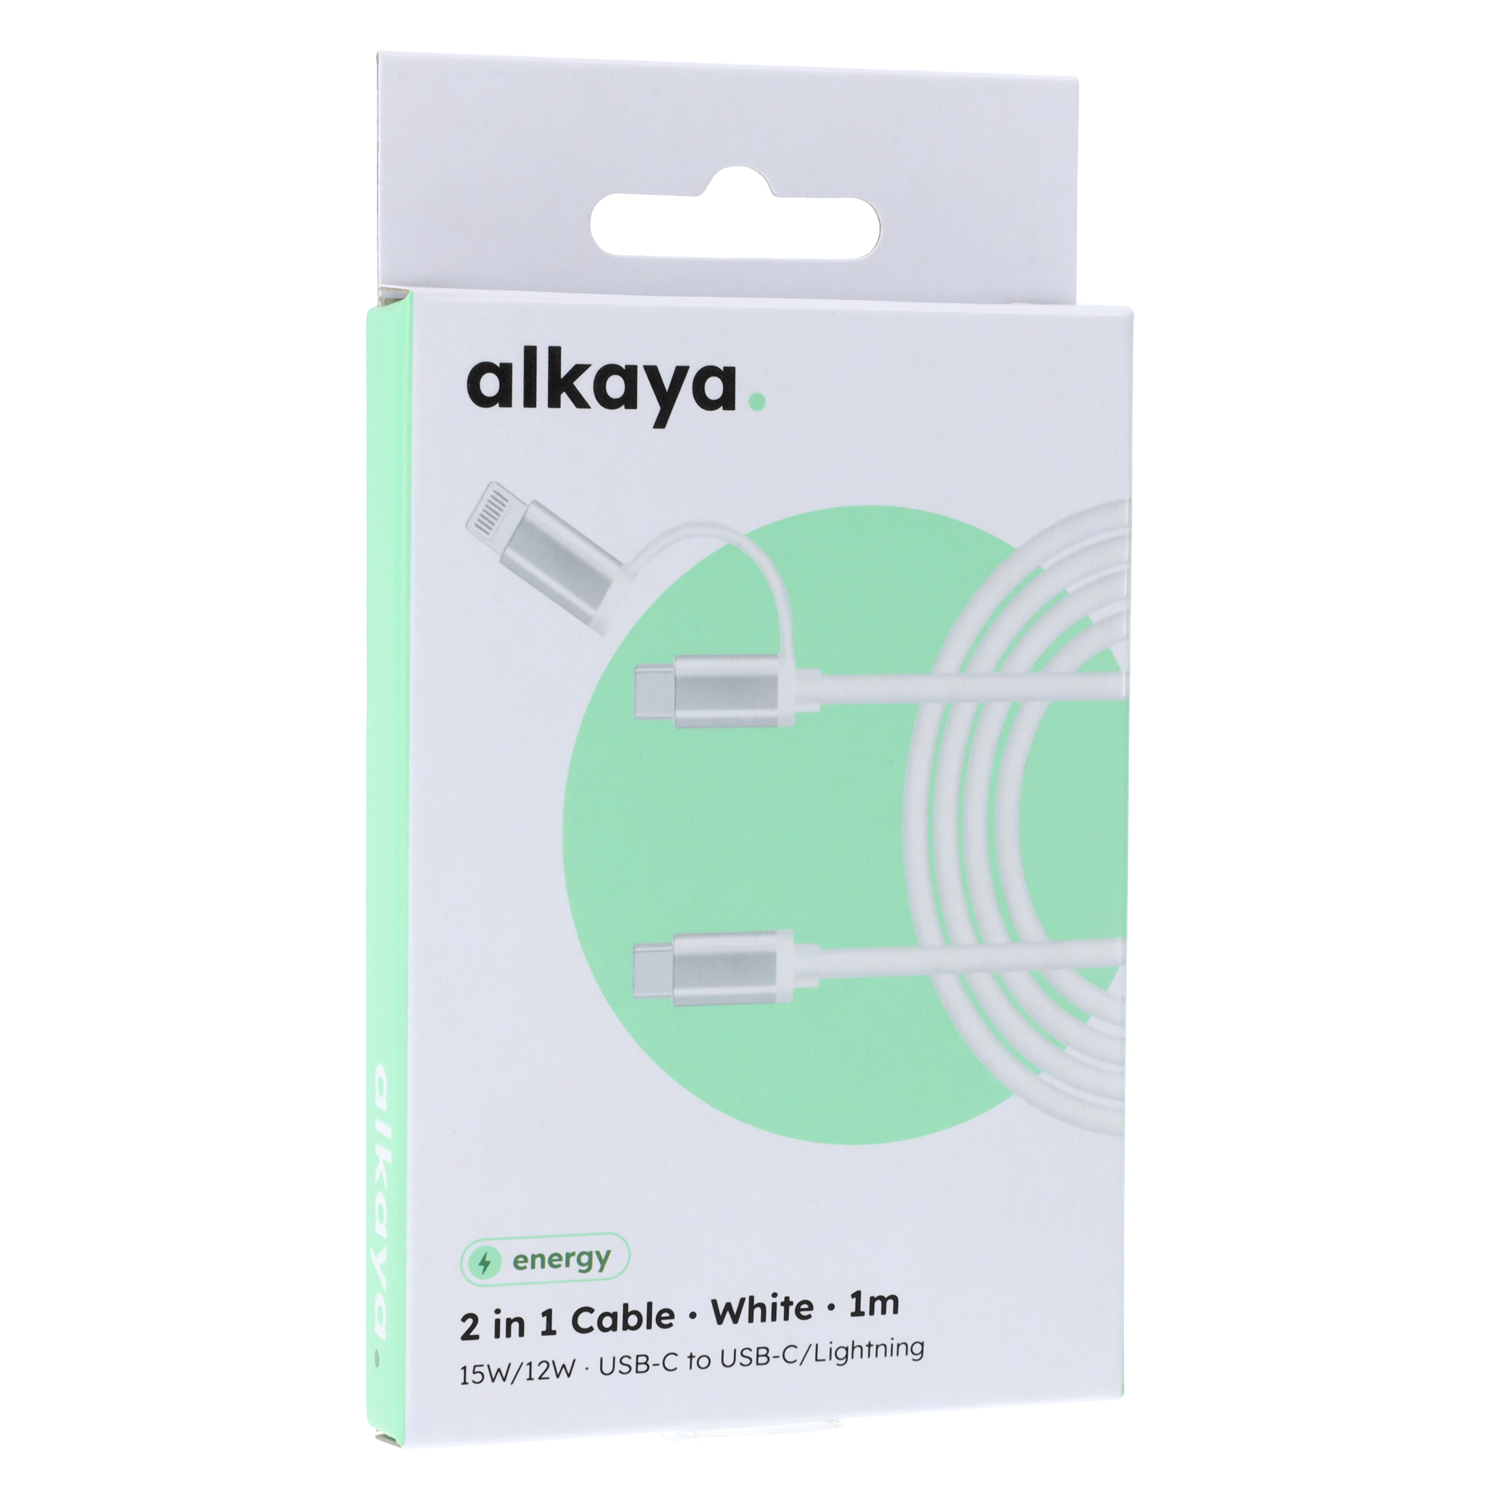 alkaya. | Speed Flex 2 in 1 Data Cable High Gloss Universal Compatibel USB-C to USB-C + Lightning| 1m | 15W/12W, Black